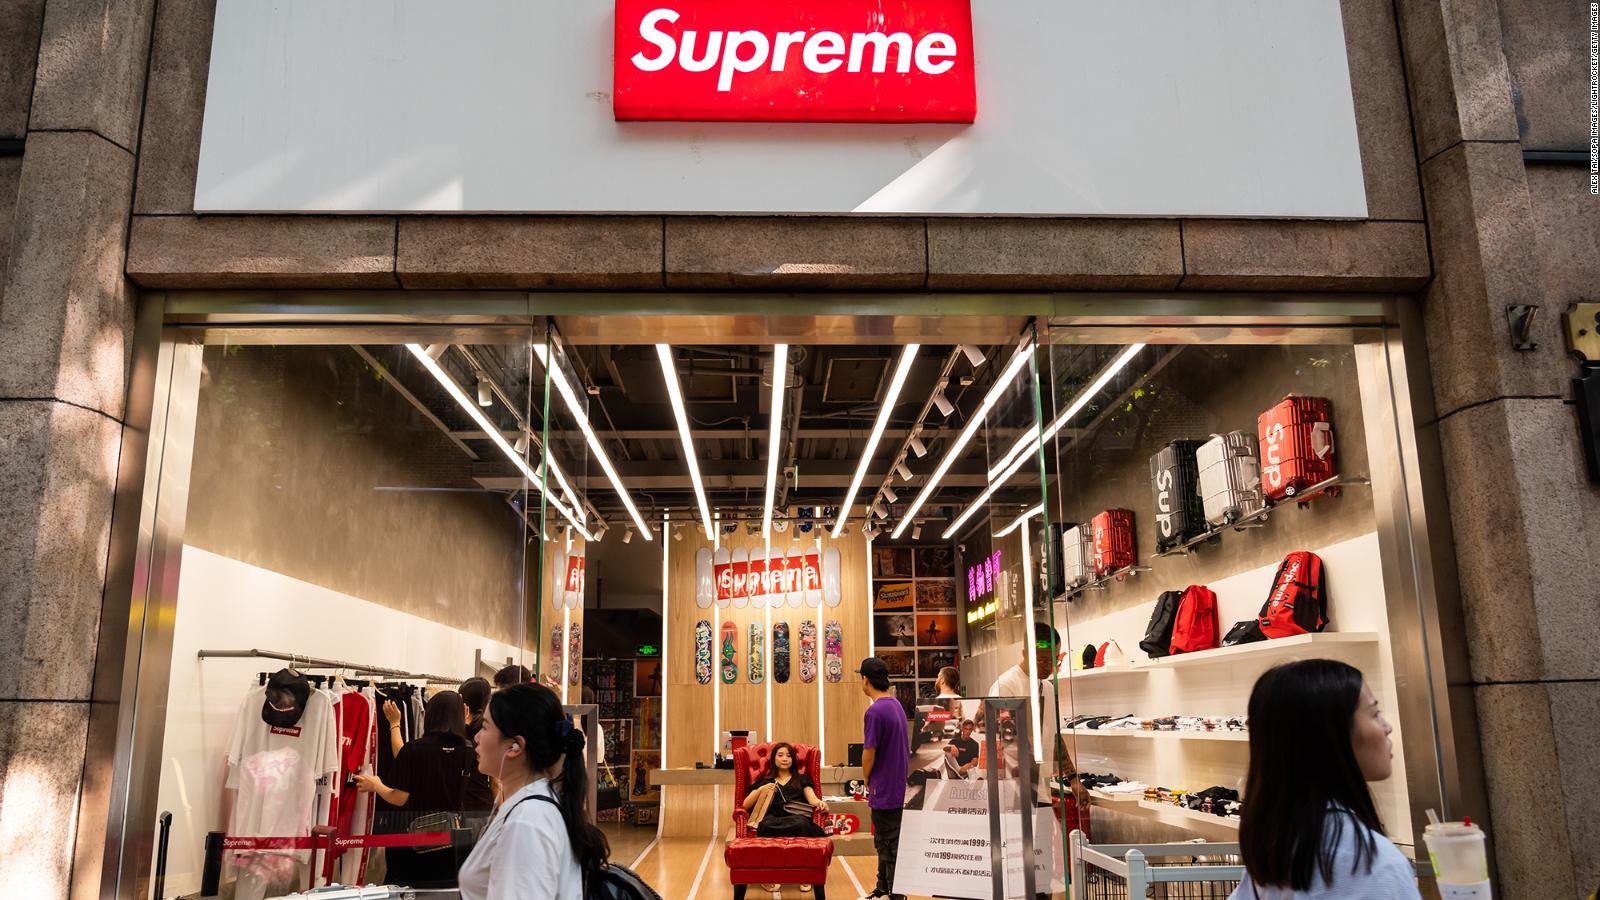 Vf Corp Is Buying Streetwear Brand Supreme For 2 1 Billion Cnn